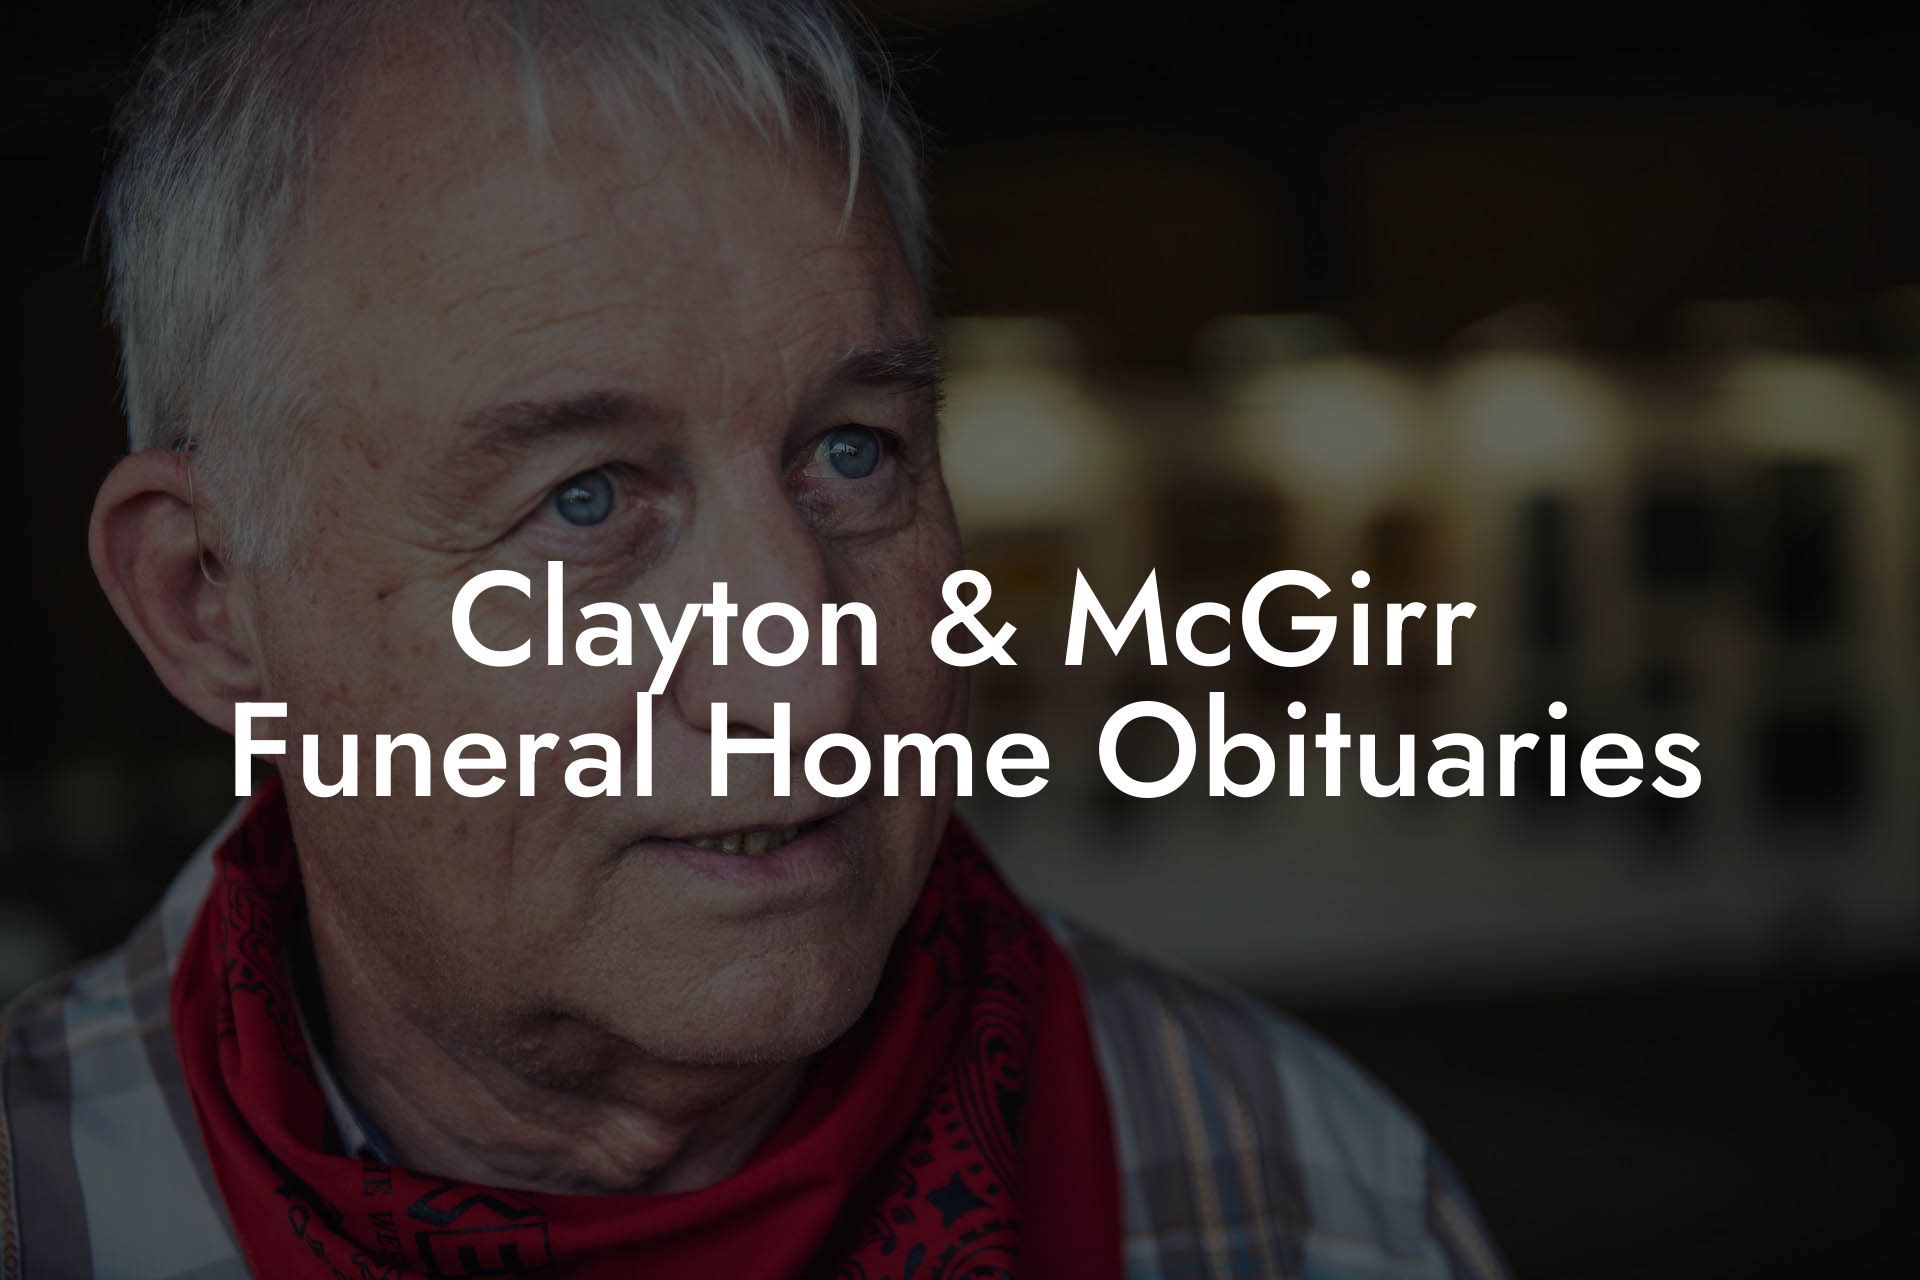 Clayton & McGirr Funeral Home Obituaries